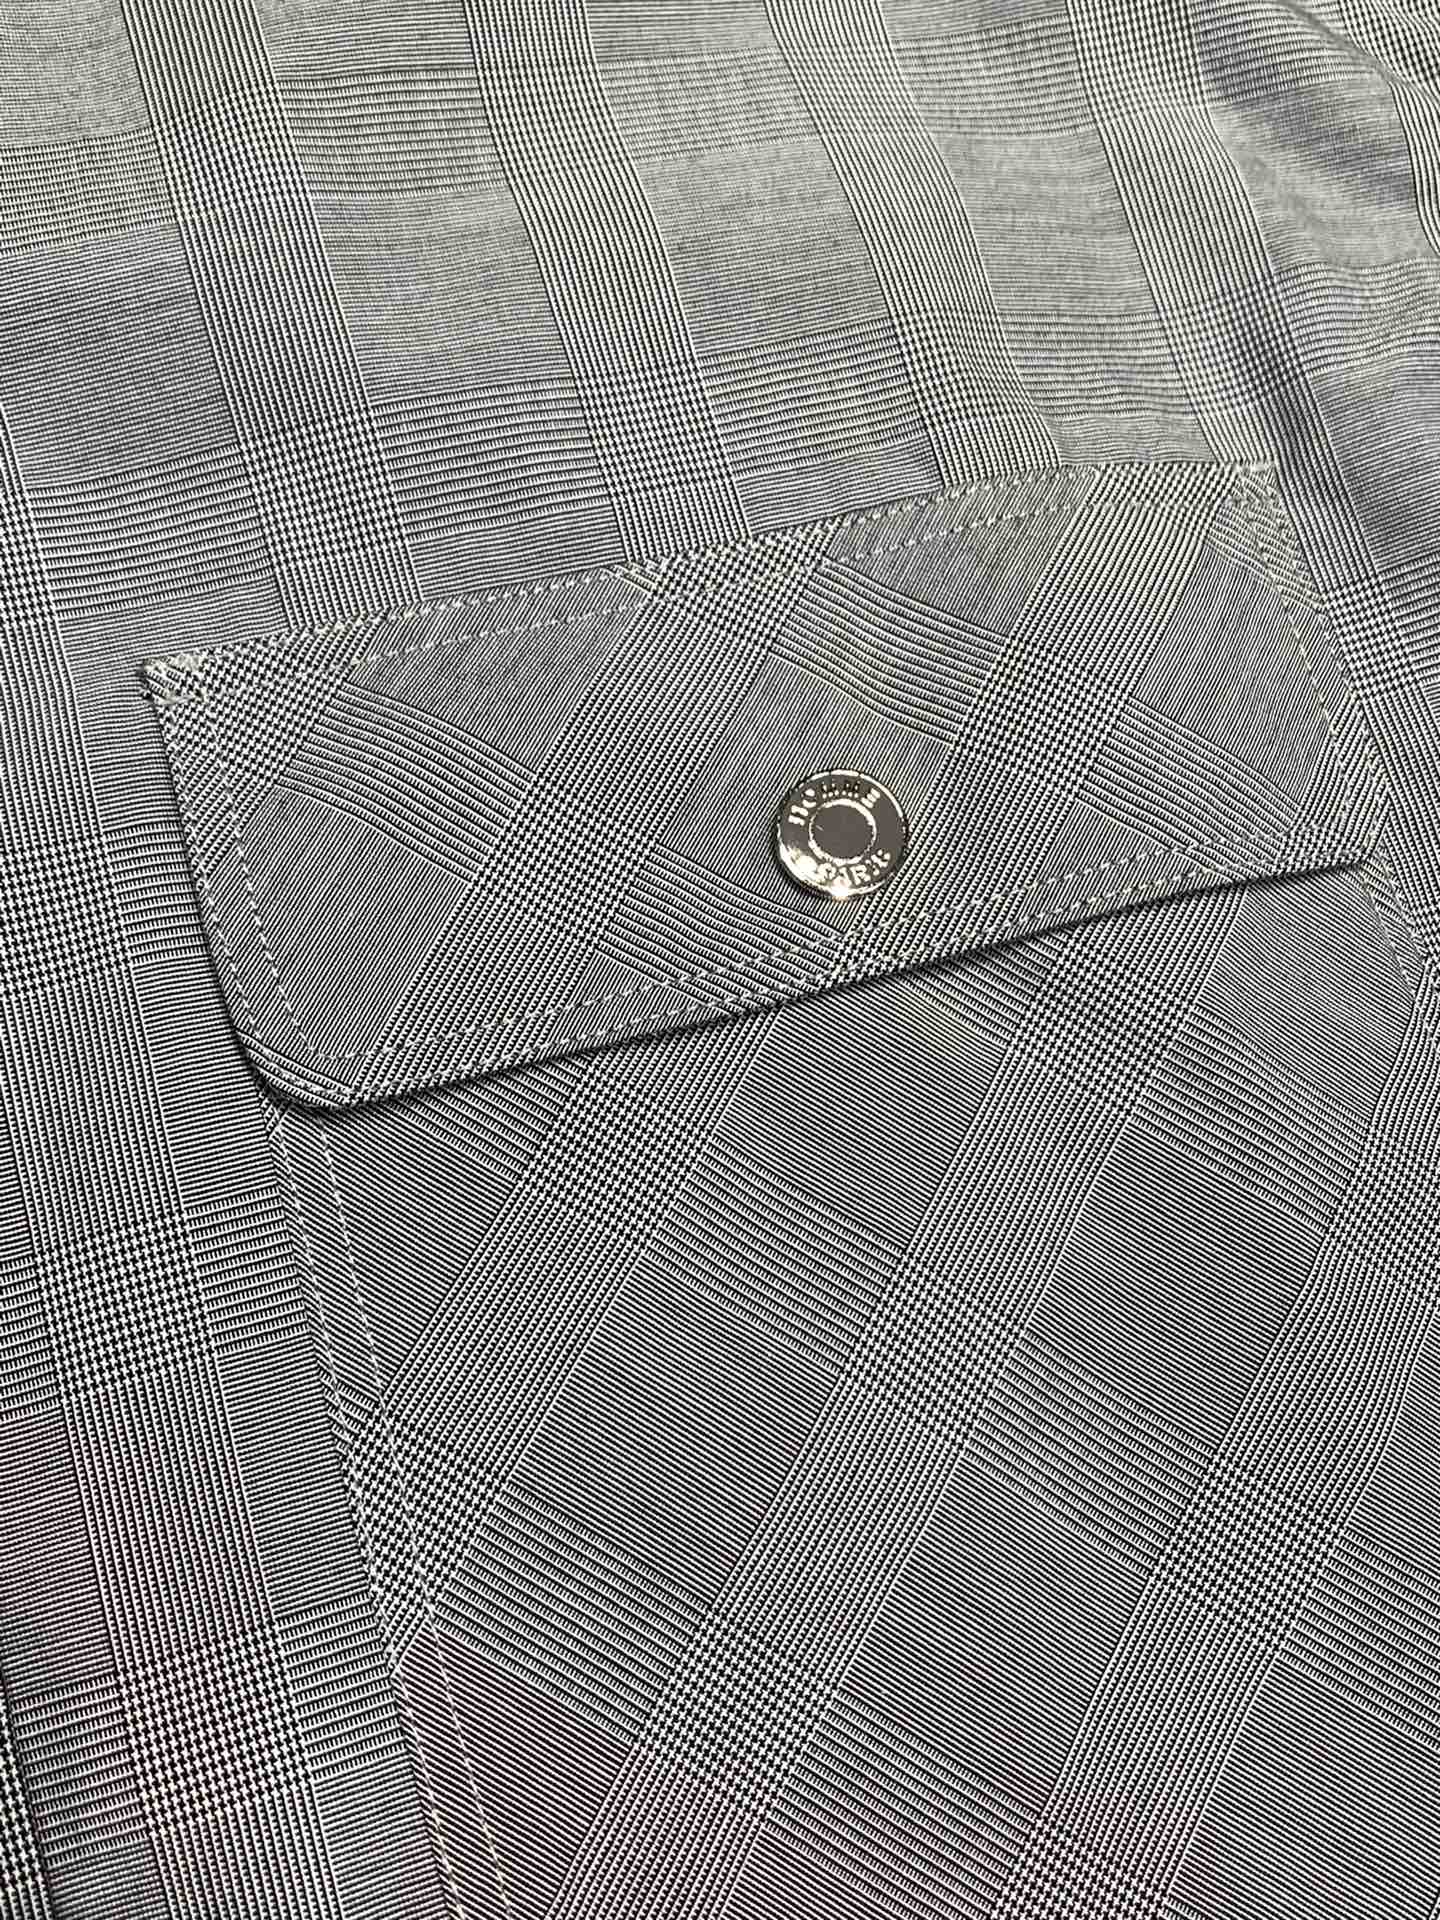 BBR巴宝莉独家专供新品时尚休闲Polo长袖进口原版科技面料柔软舒适上身舒适透气独特设计风格无论是单穿还